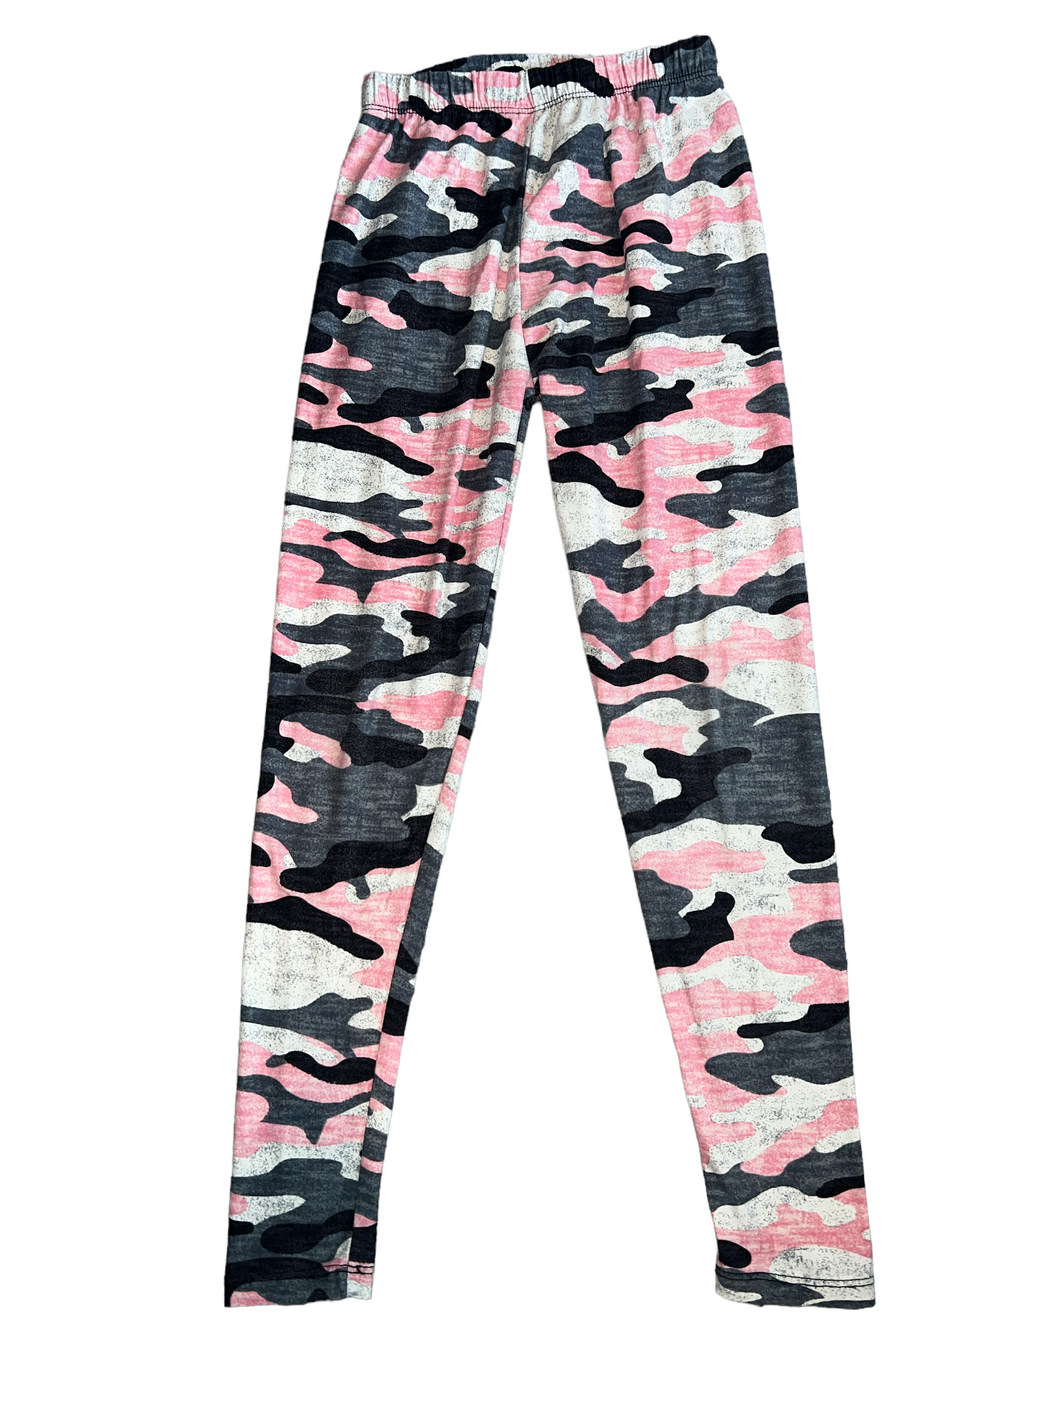 Suzette girls comfy camouflage leggings S(7)